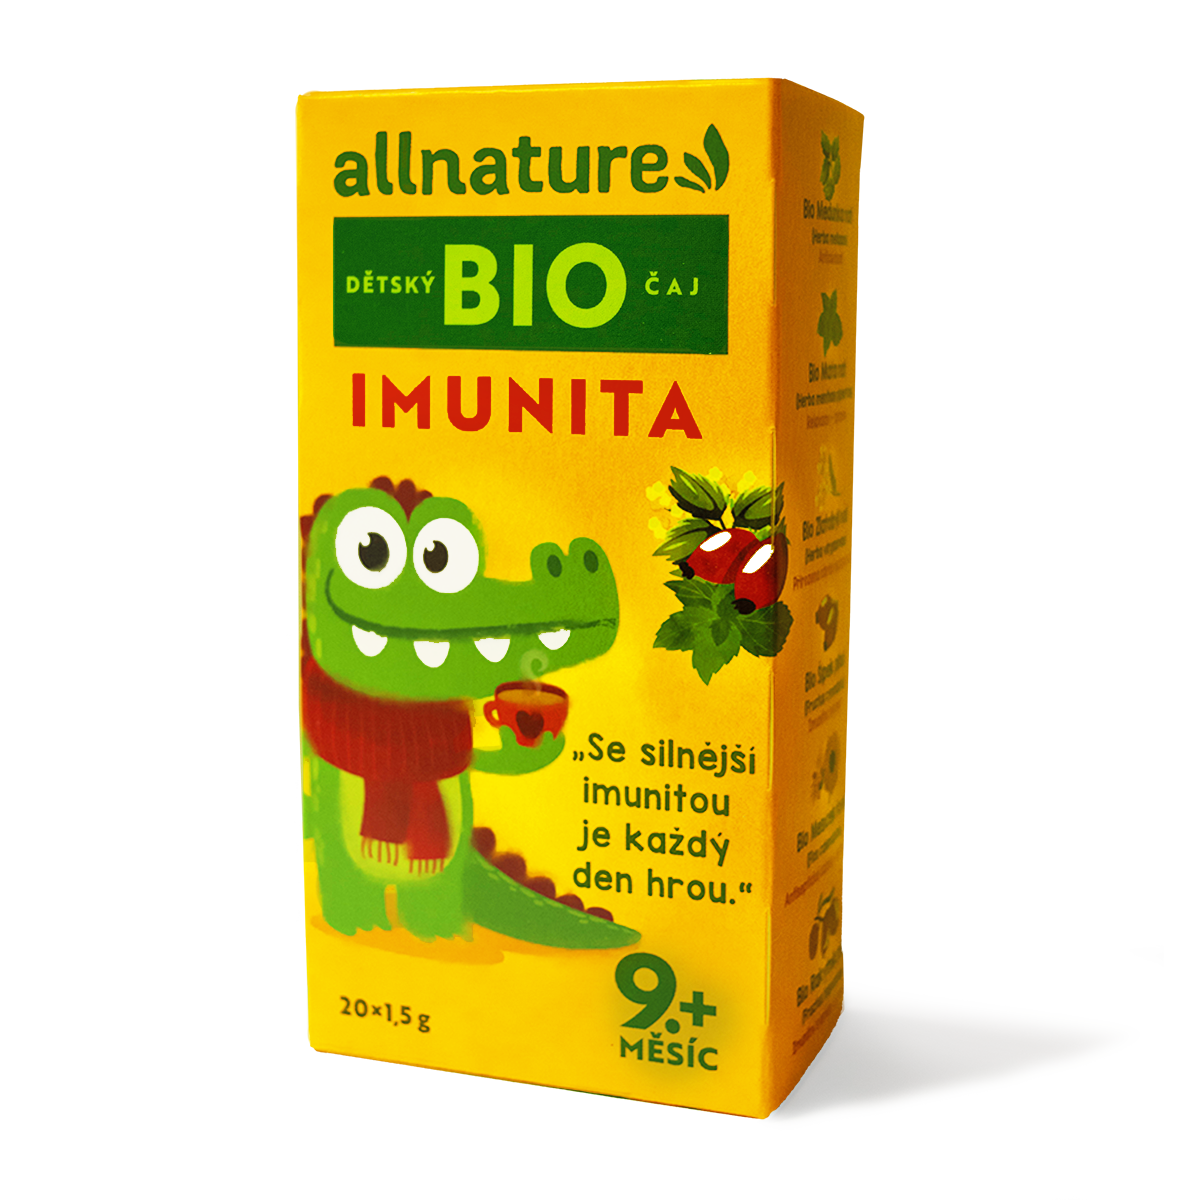 Allnature BIO Imunita dětský čaj 20x1